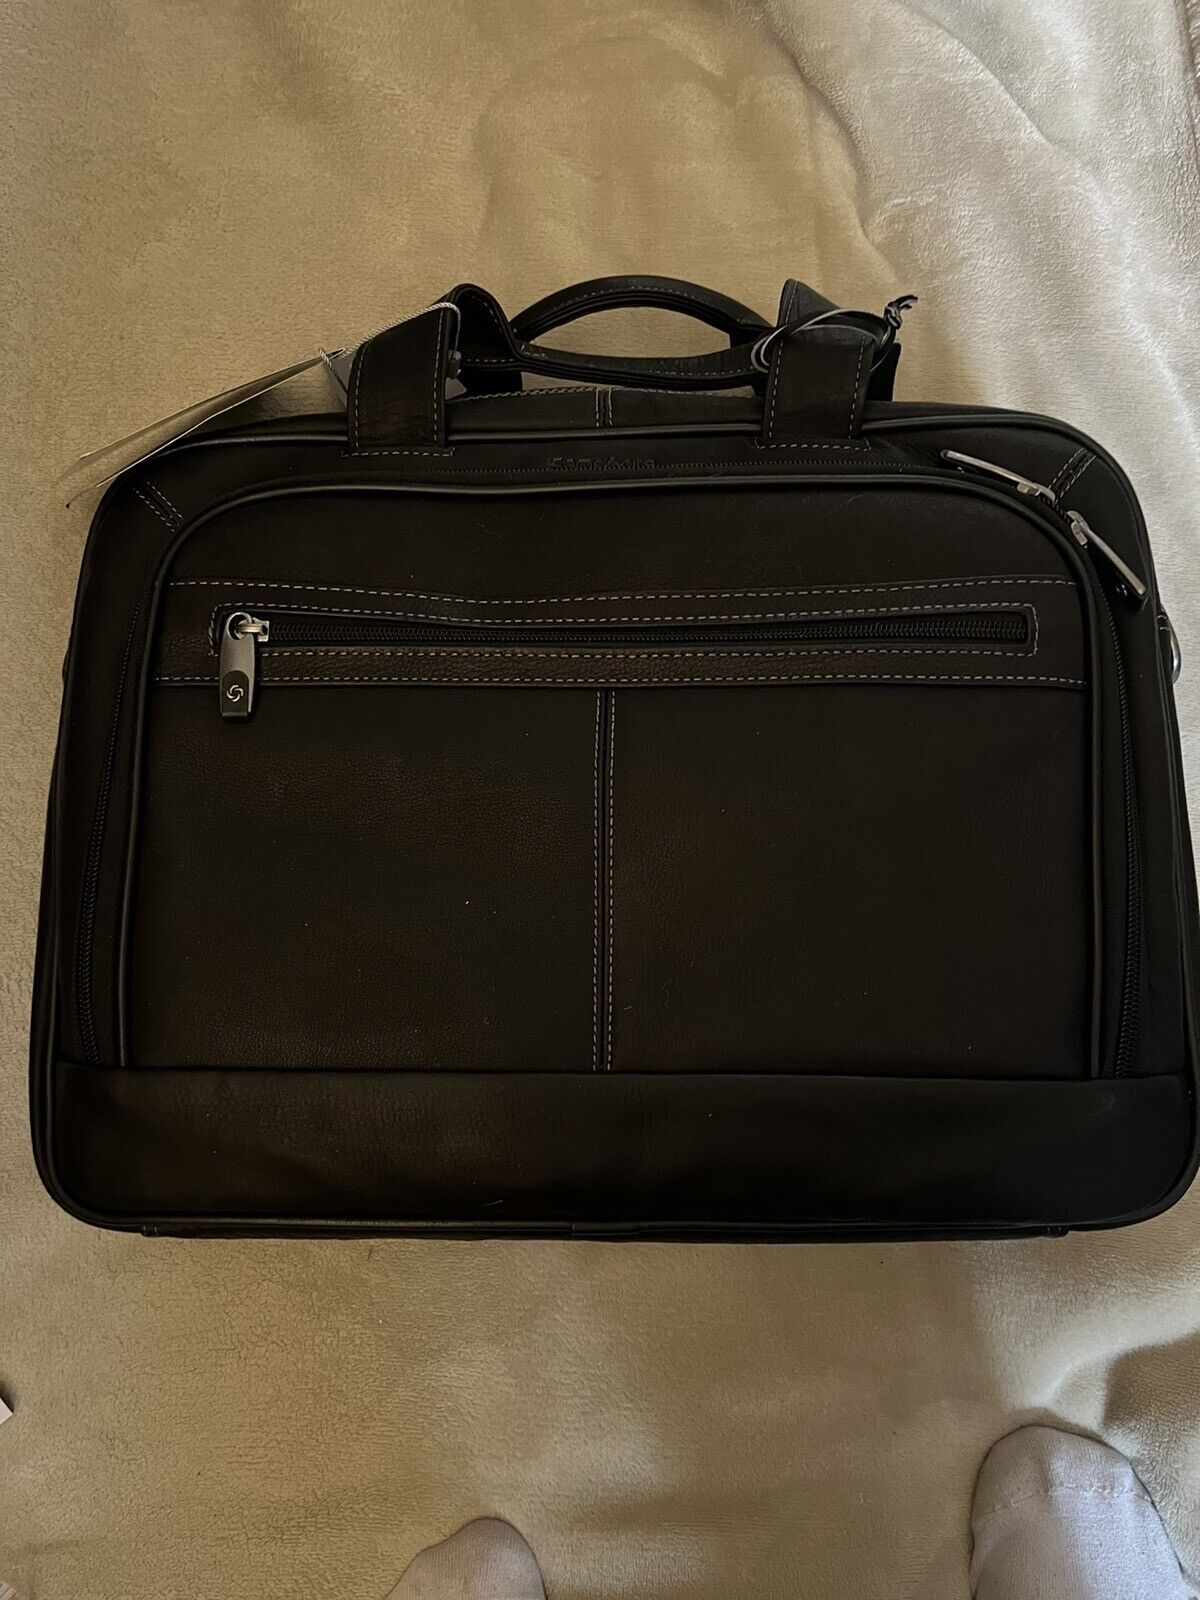 Samsonite Business Case Briefcase Leather Portfolio Computer Compatible NEW